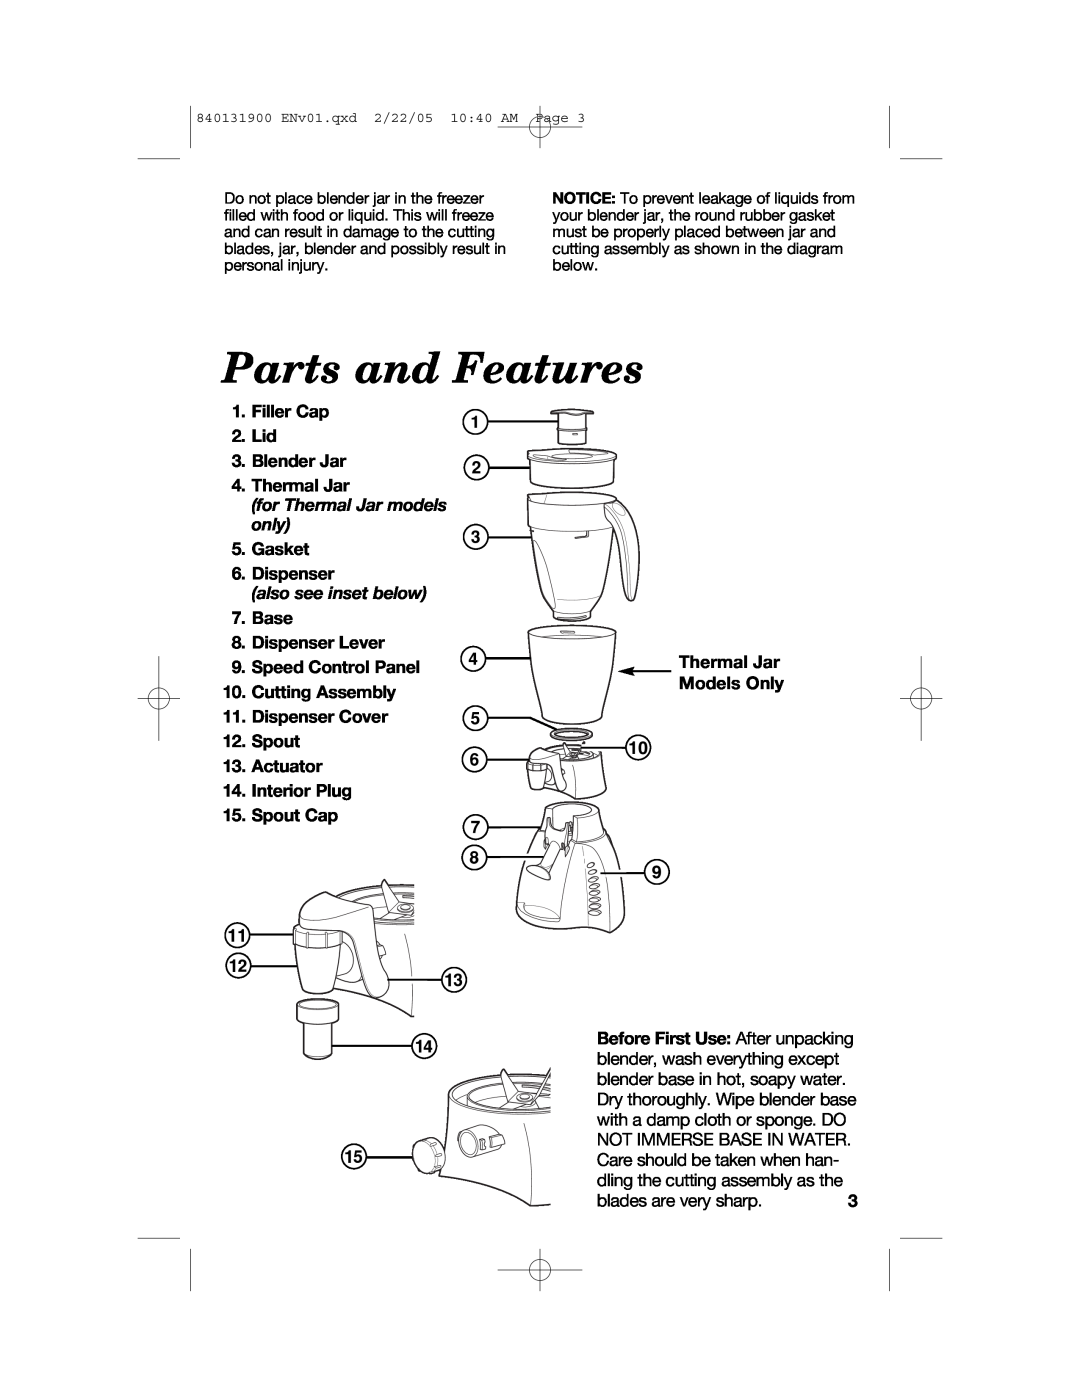 Hamilton Beach 50754C manual Parts and Features, Filler Cap 2. Lid 3. Blender Jar 4. Thermal Jar, Gasket 6. Dispenser 